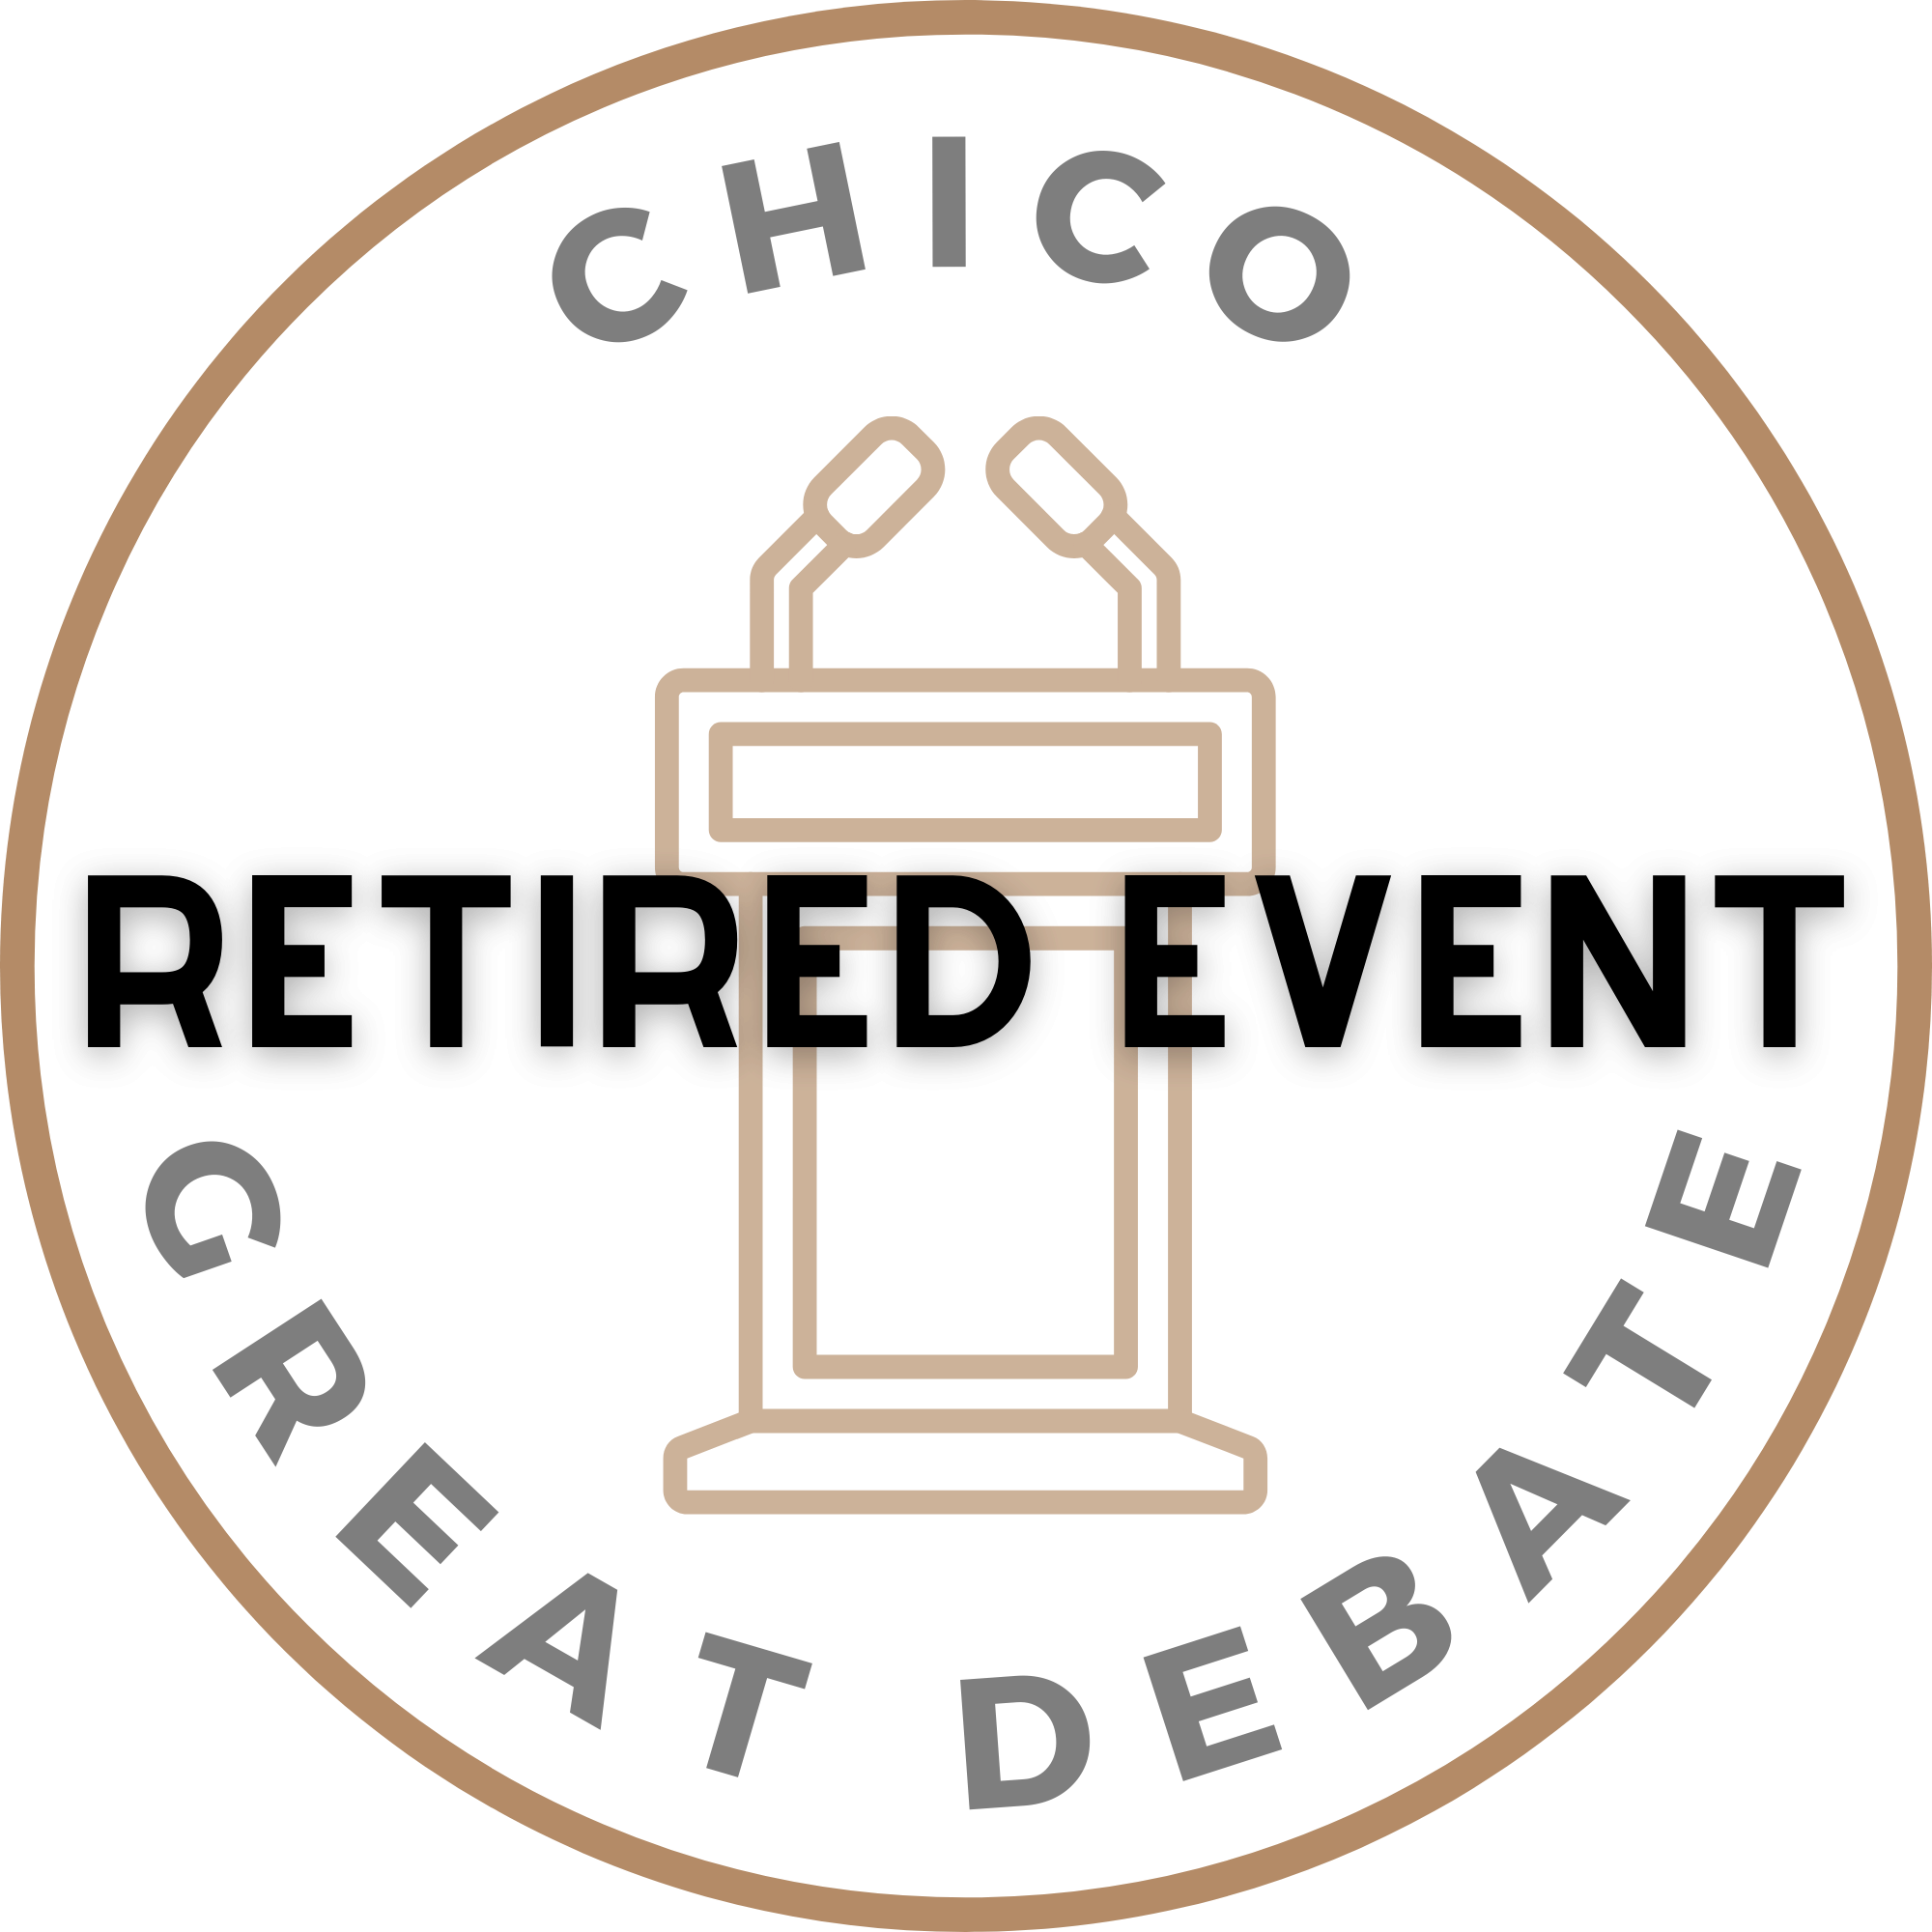 Chico Great Debate Retired Event round logo